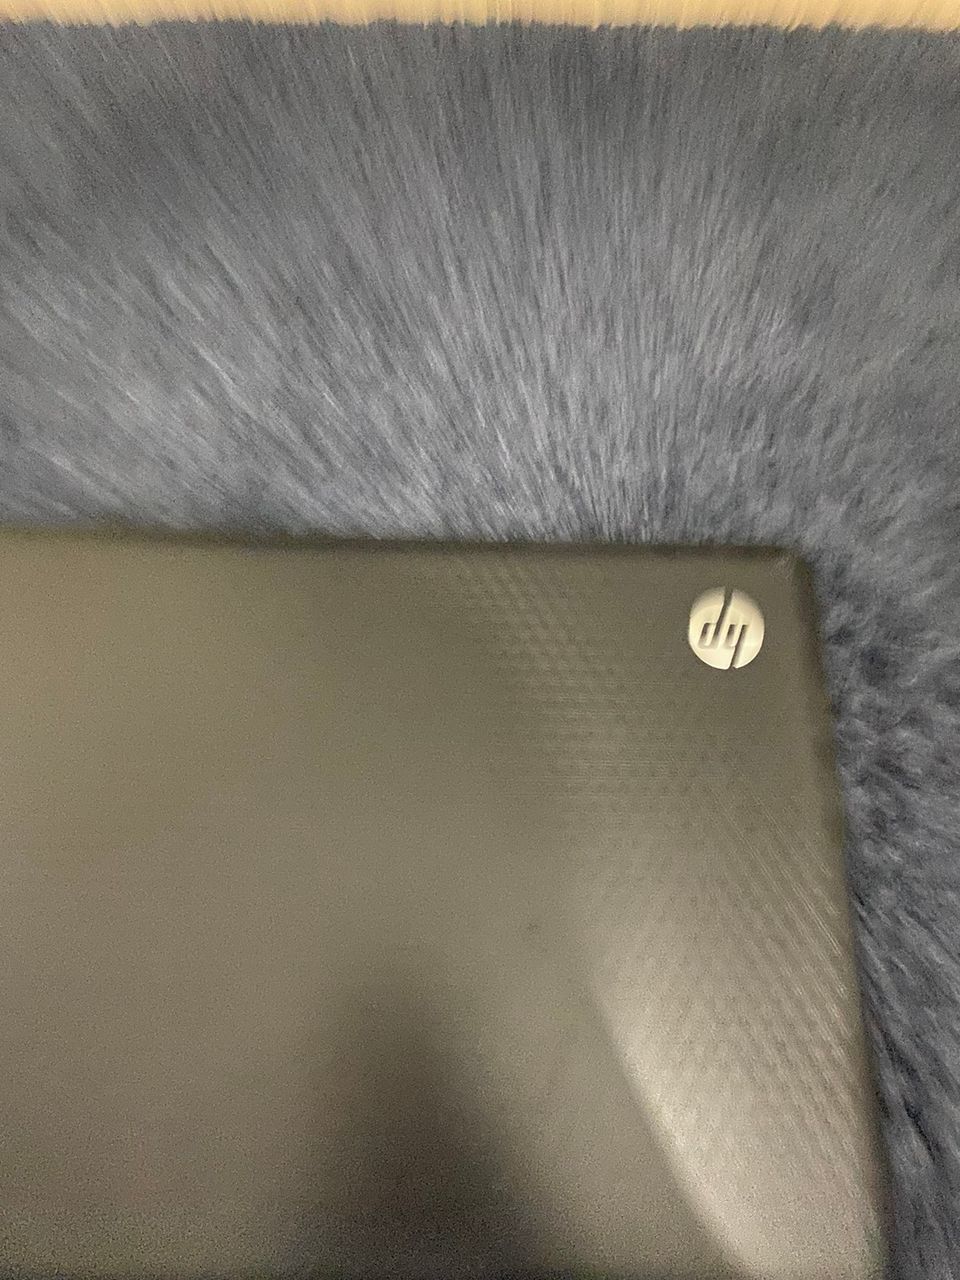 HP tietokone